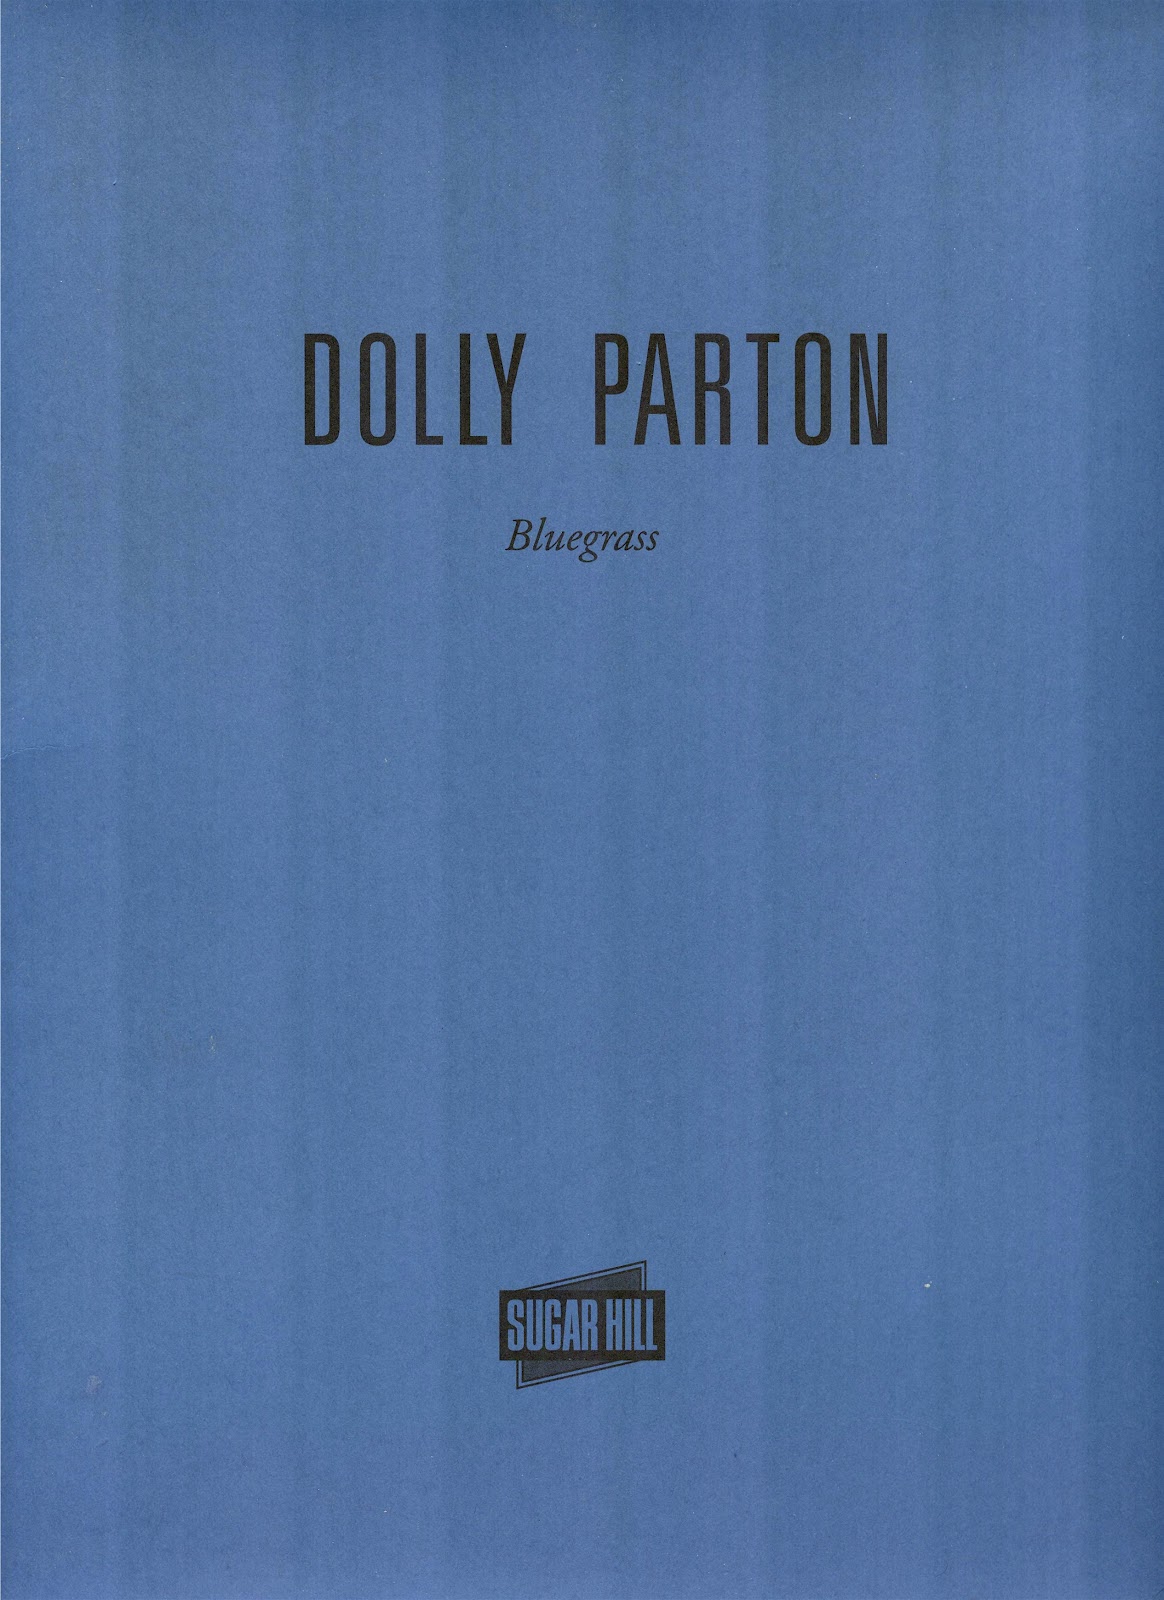 Lansure's Music Paraphernalia: DOLLY PARTON | Press Kits | Memorabilia1164 x 1600